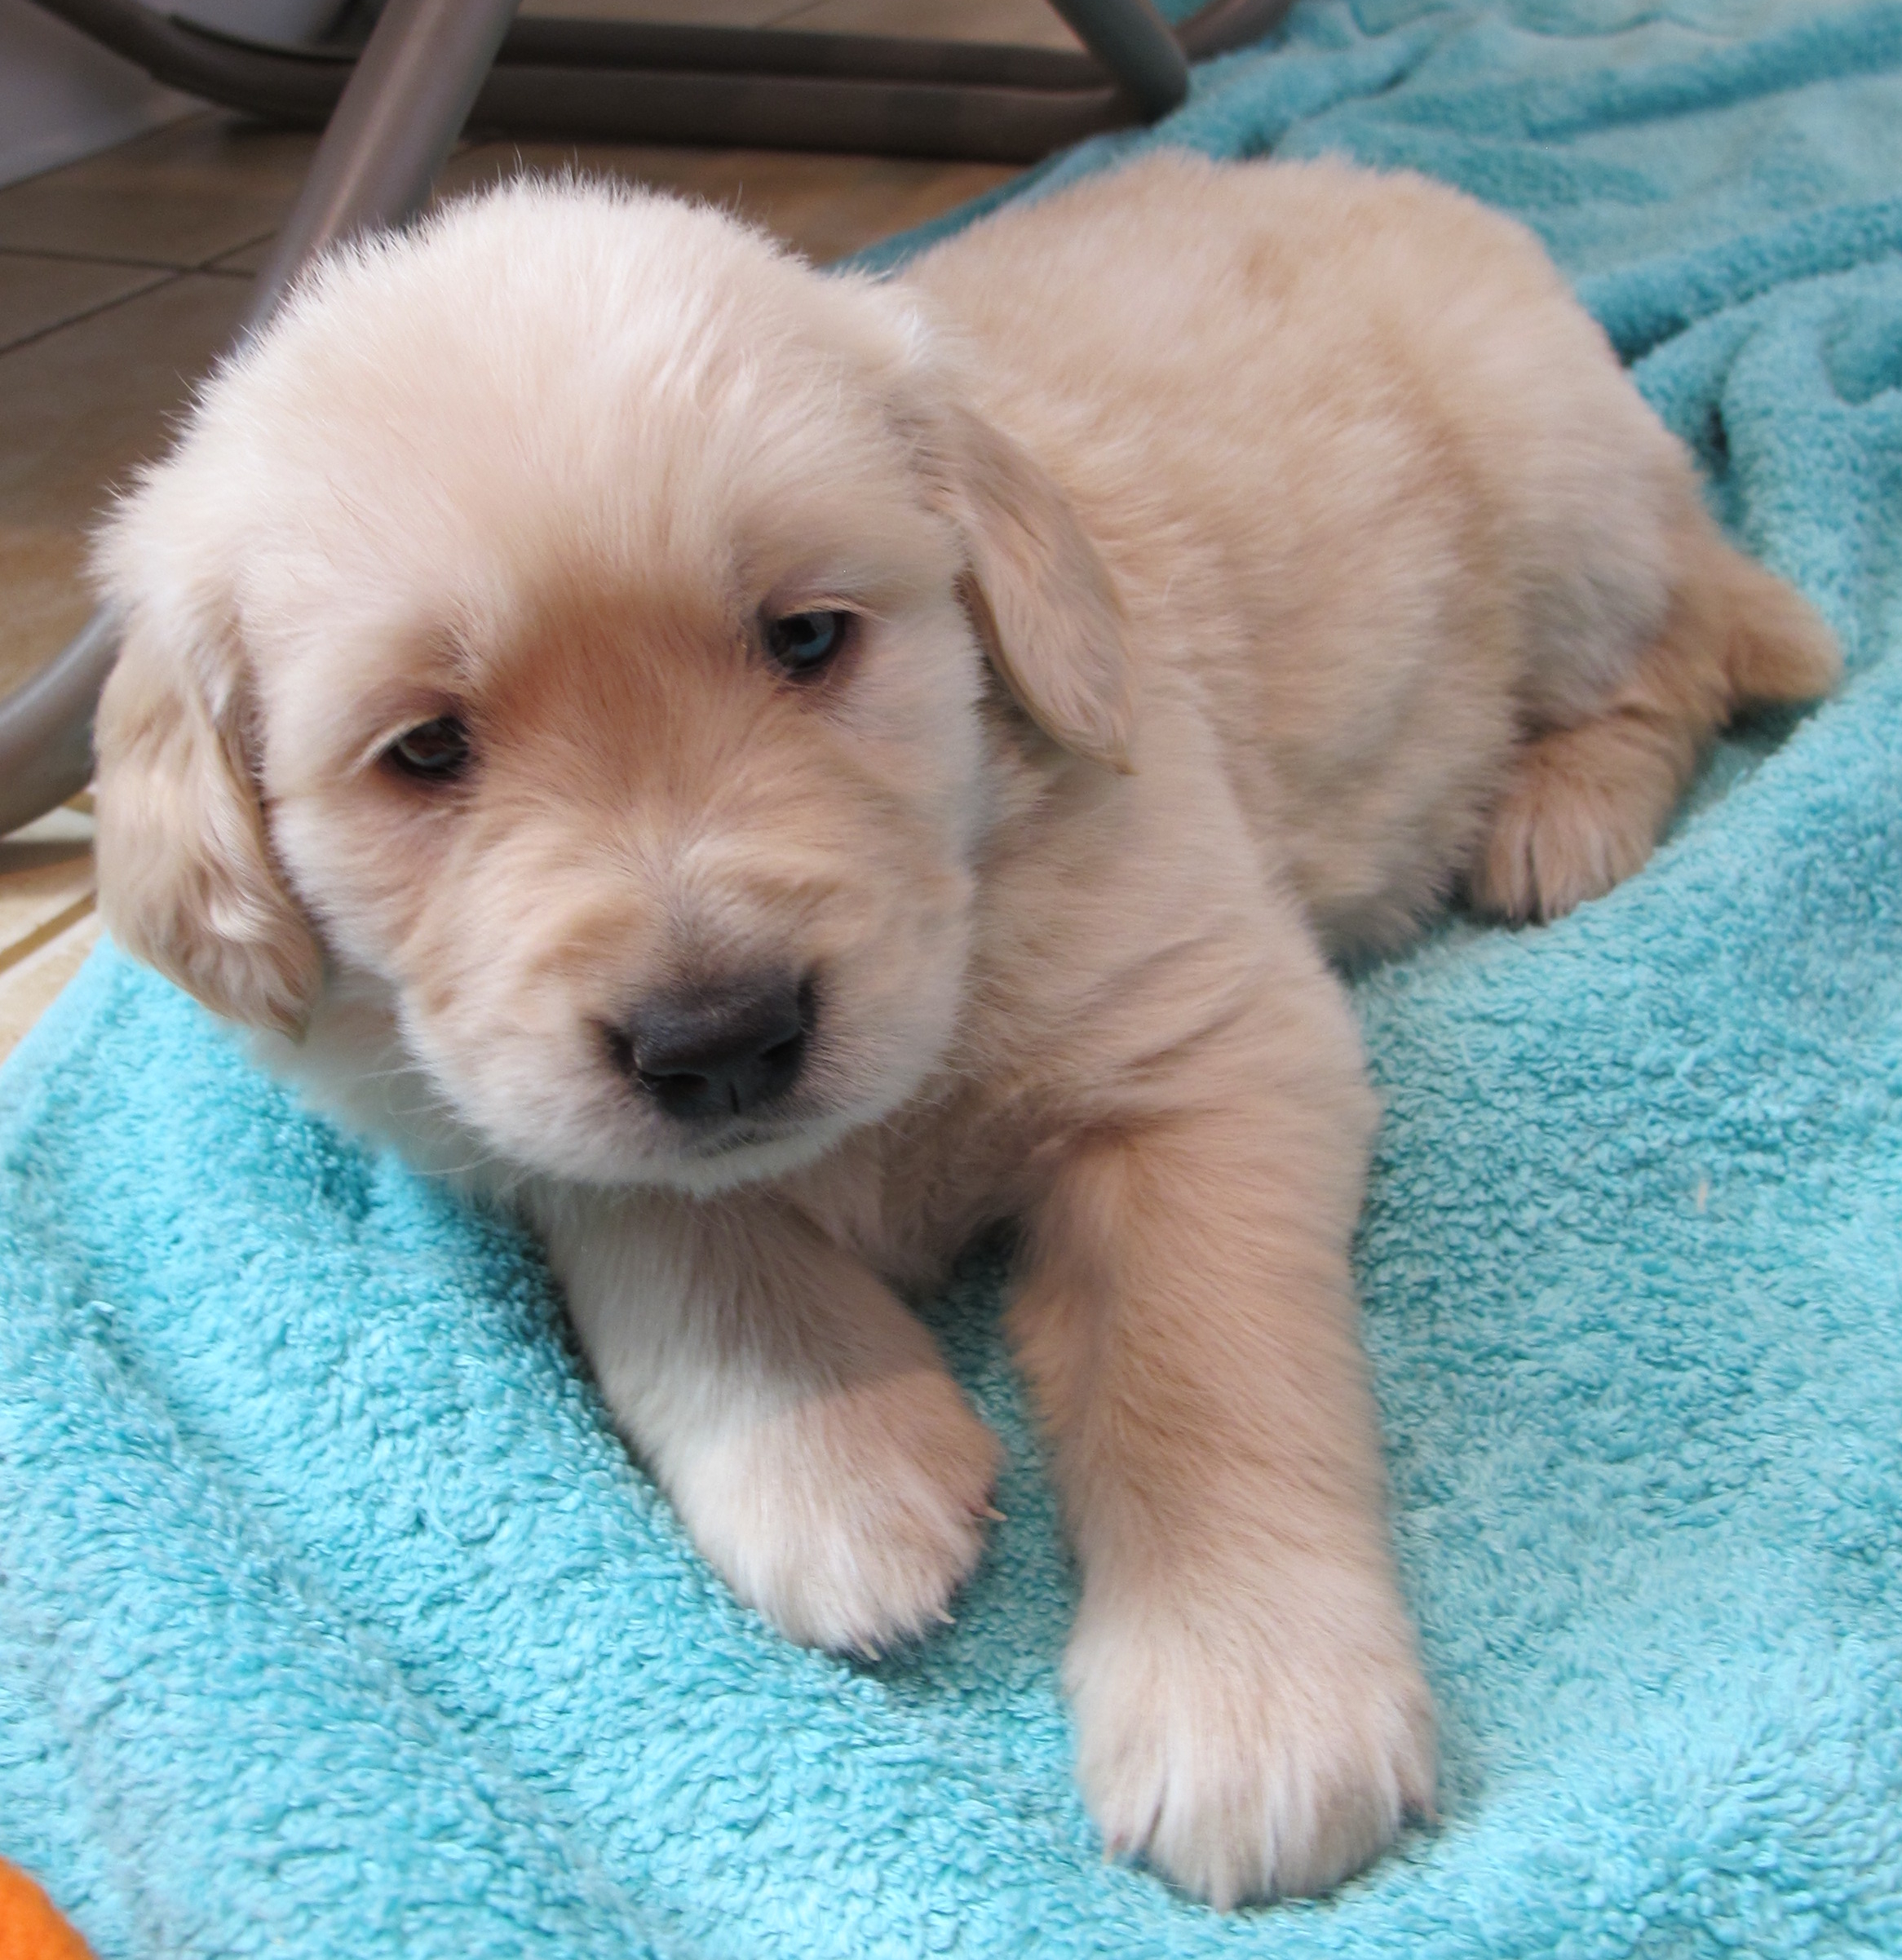 File:5-week-old Golden Retriever puppy.jpg - Wikimedia Commons